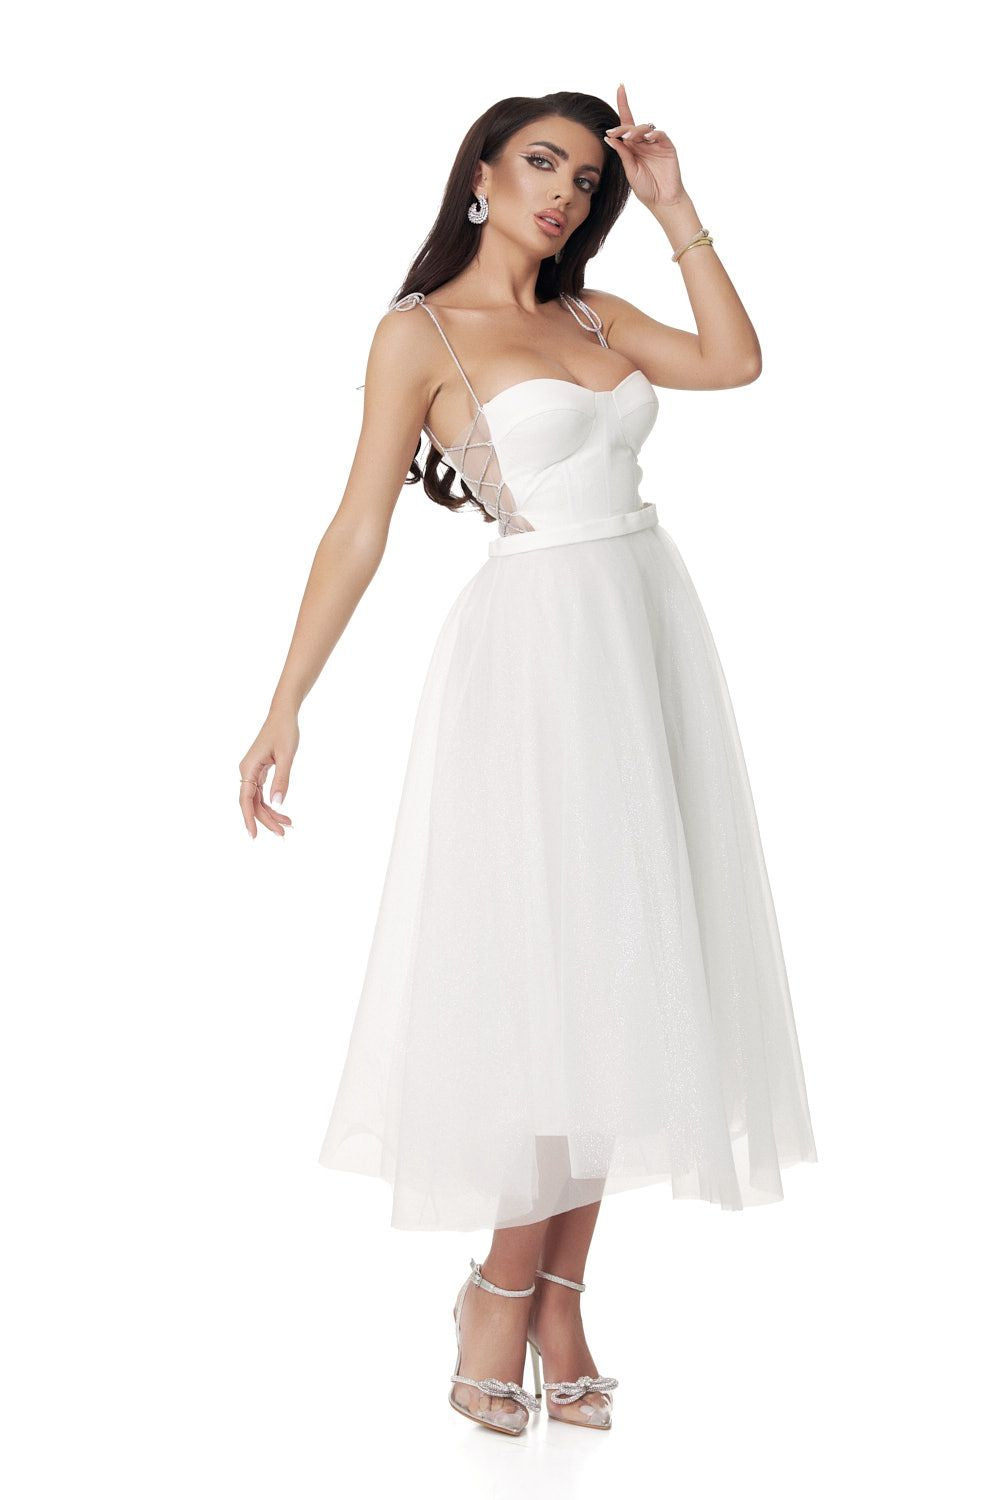 Yuriko Bogas medium white lady dress